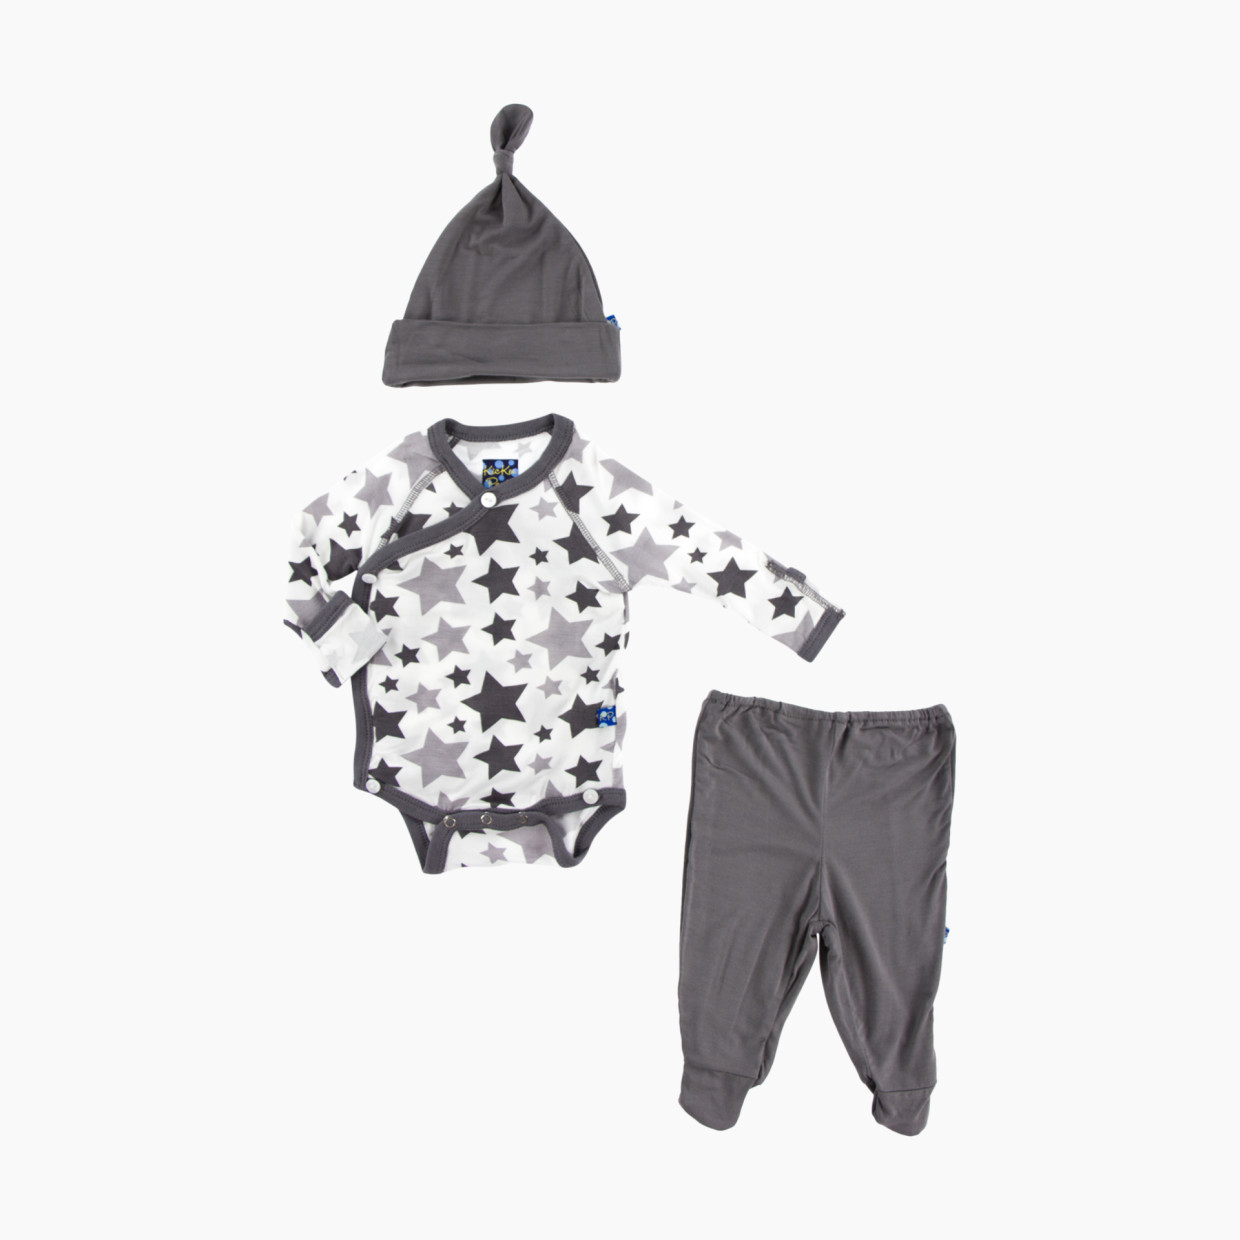 KicKee Pants Essentials Wrap Gift Set - Feather Rain Stars, Newborn.